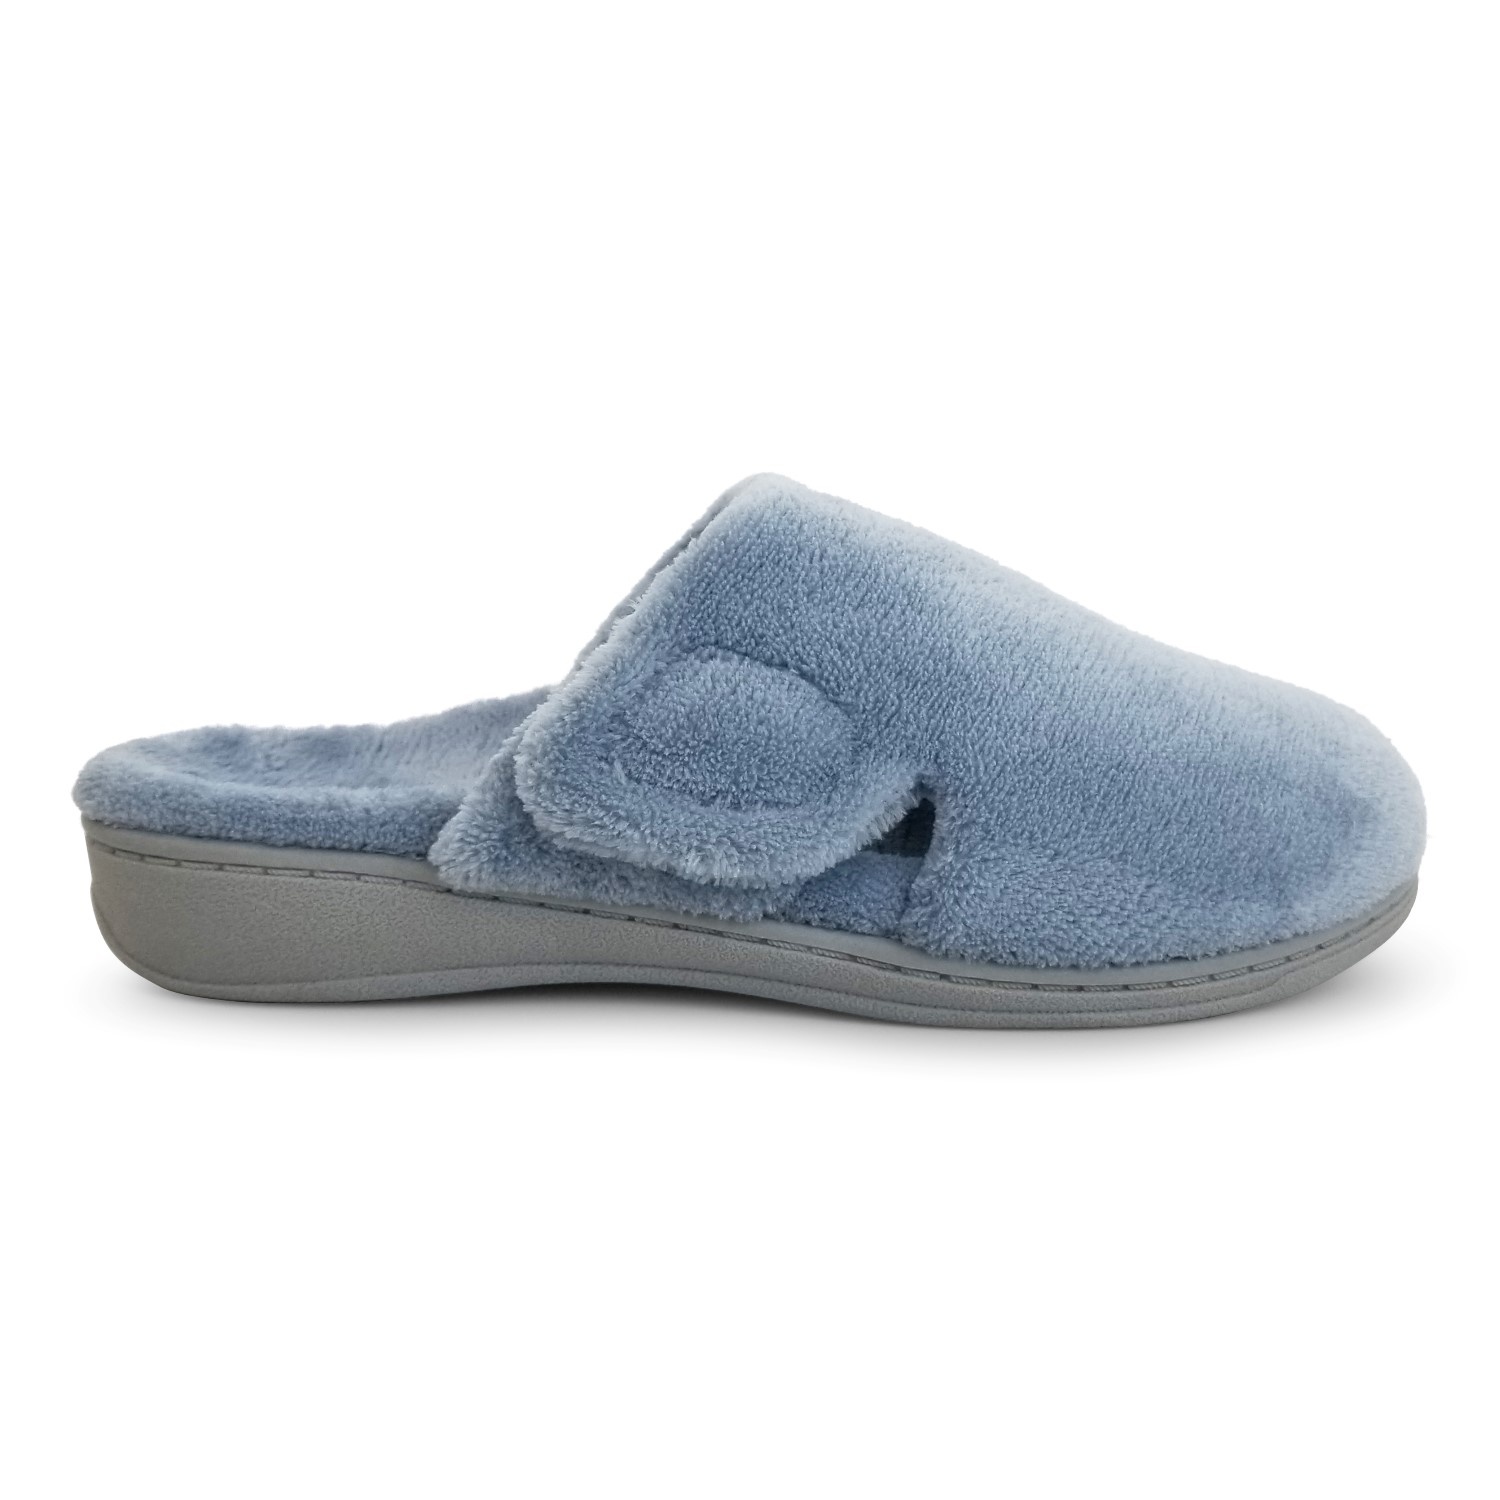 orthaheel slippers amazon